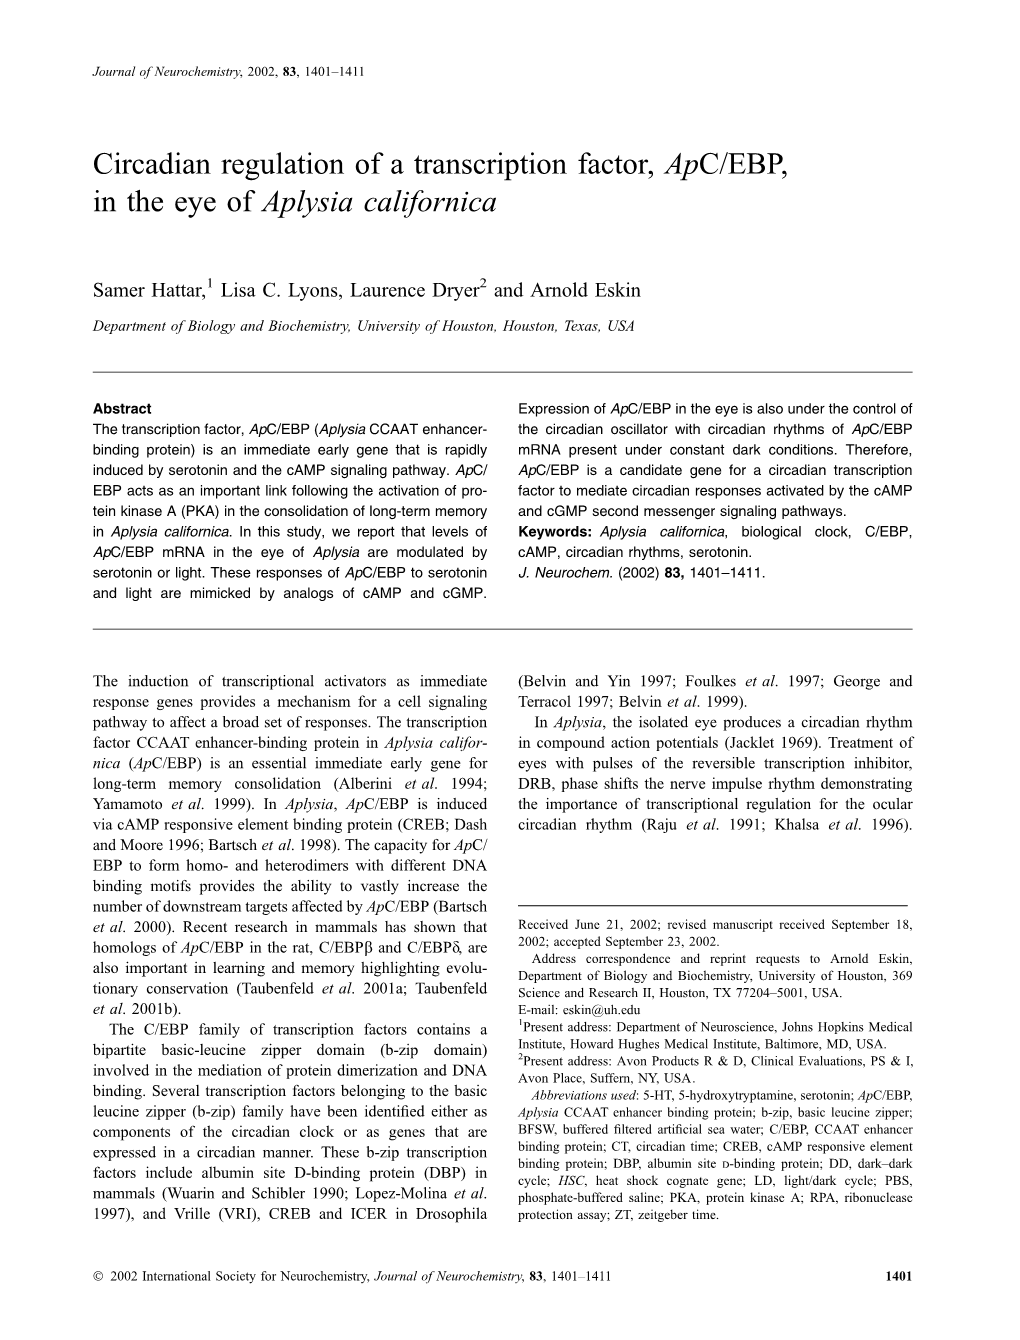 Circadian Regulation of a Transcription Factor, Apc/EBP, in the Eye of Aplysia Californica